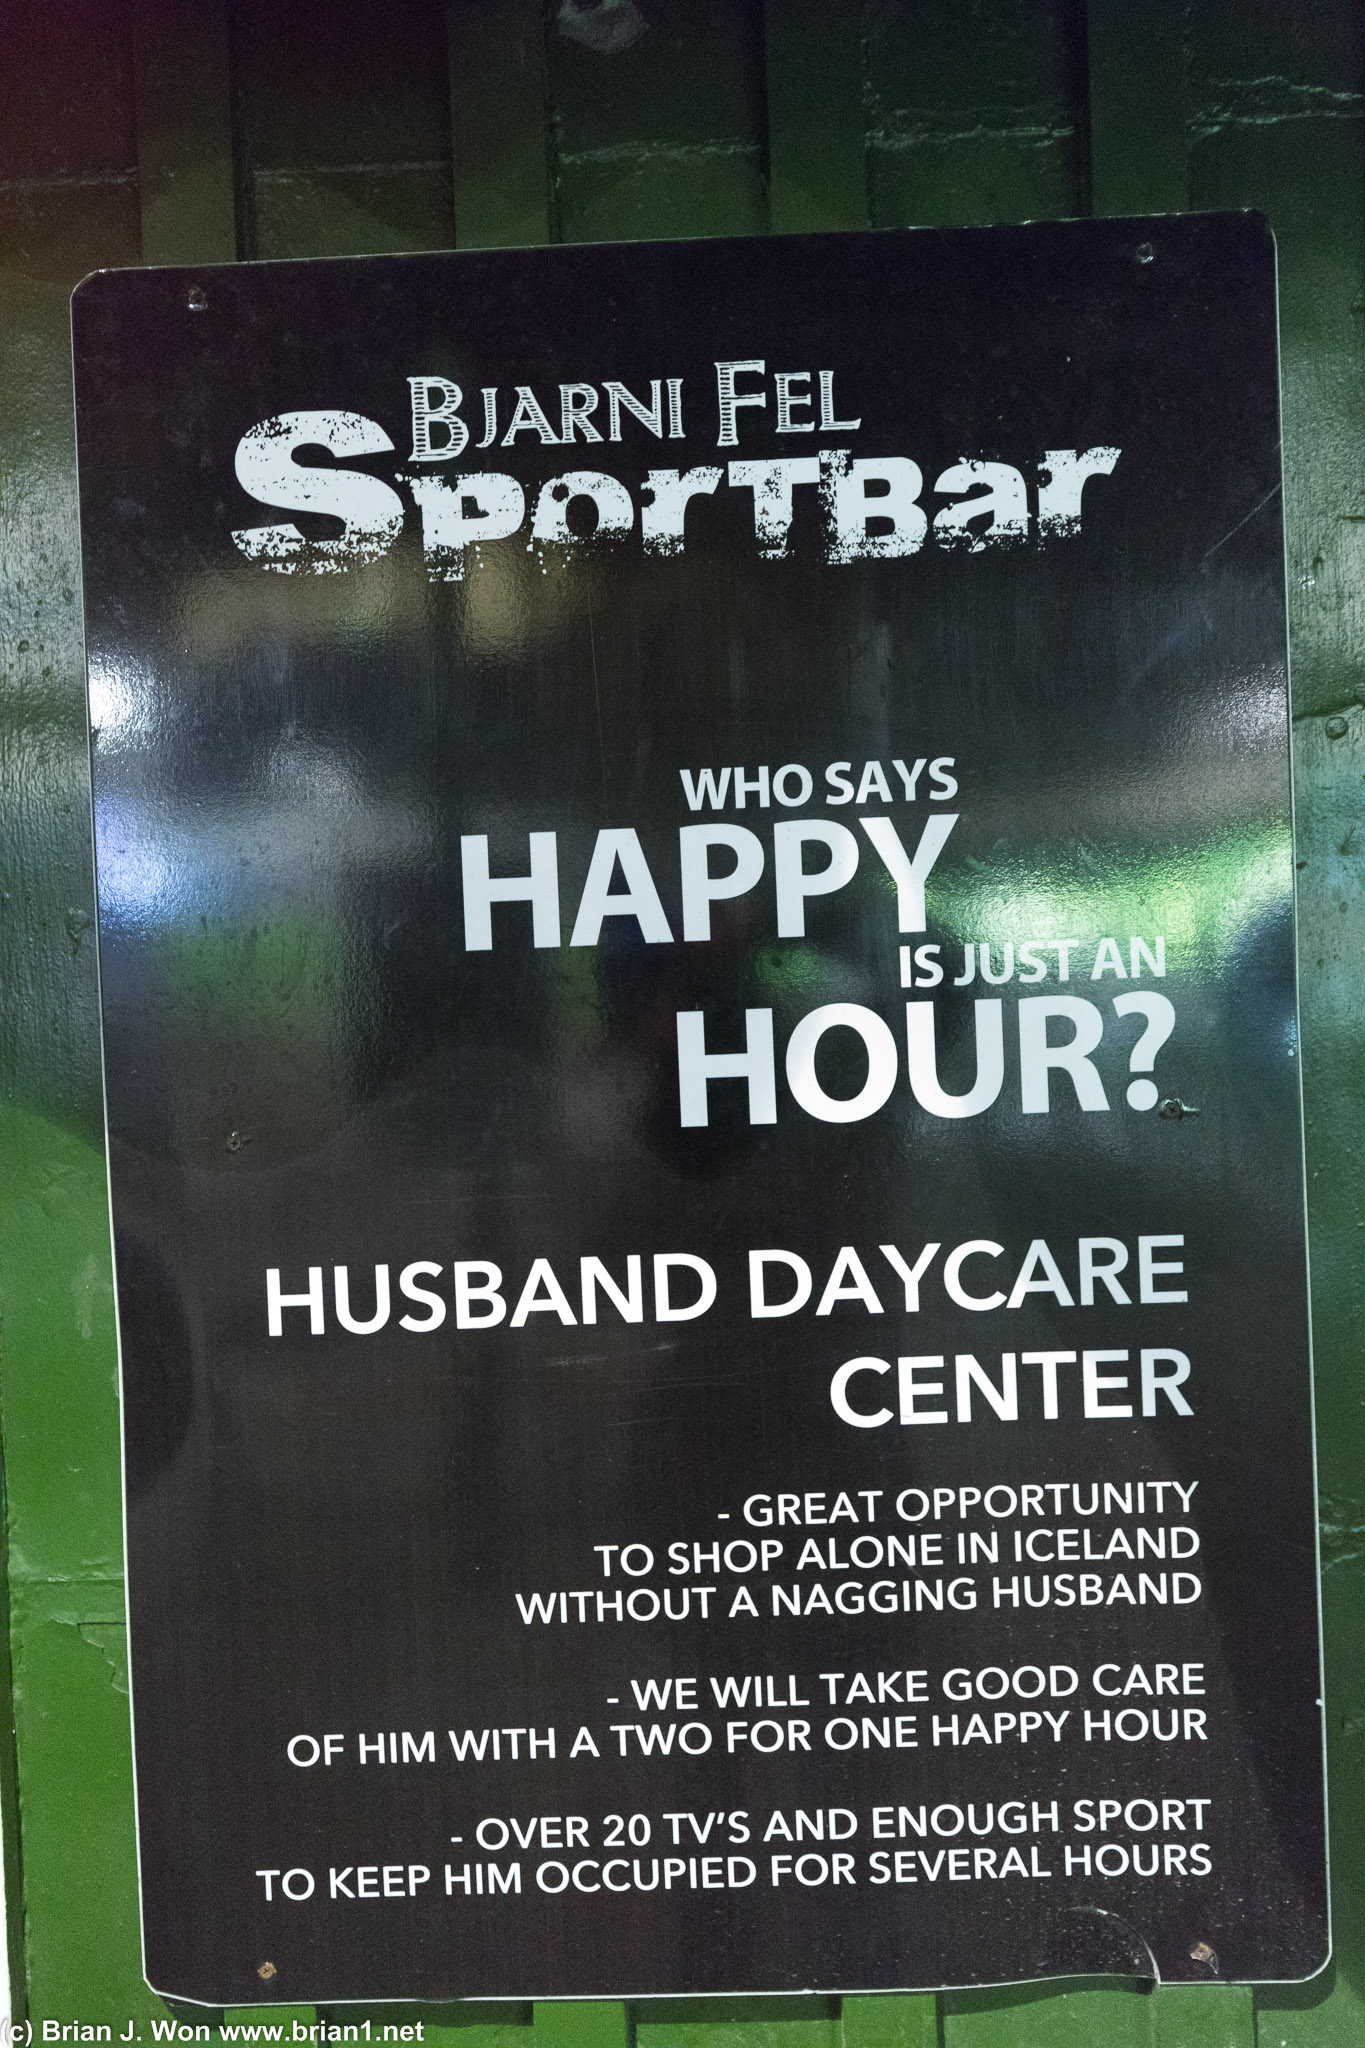 Husband daycare center!